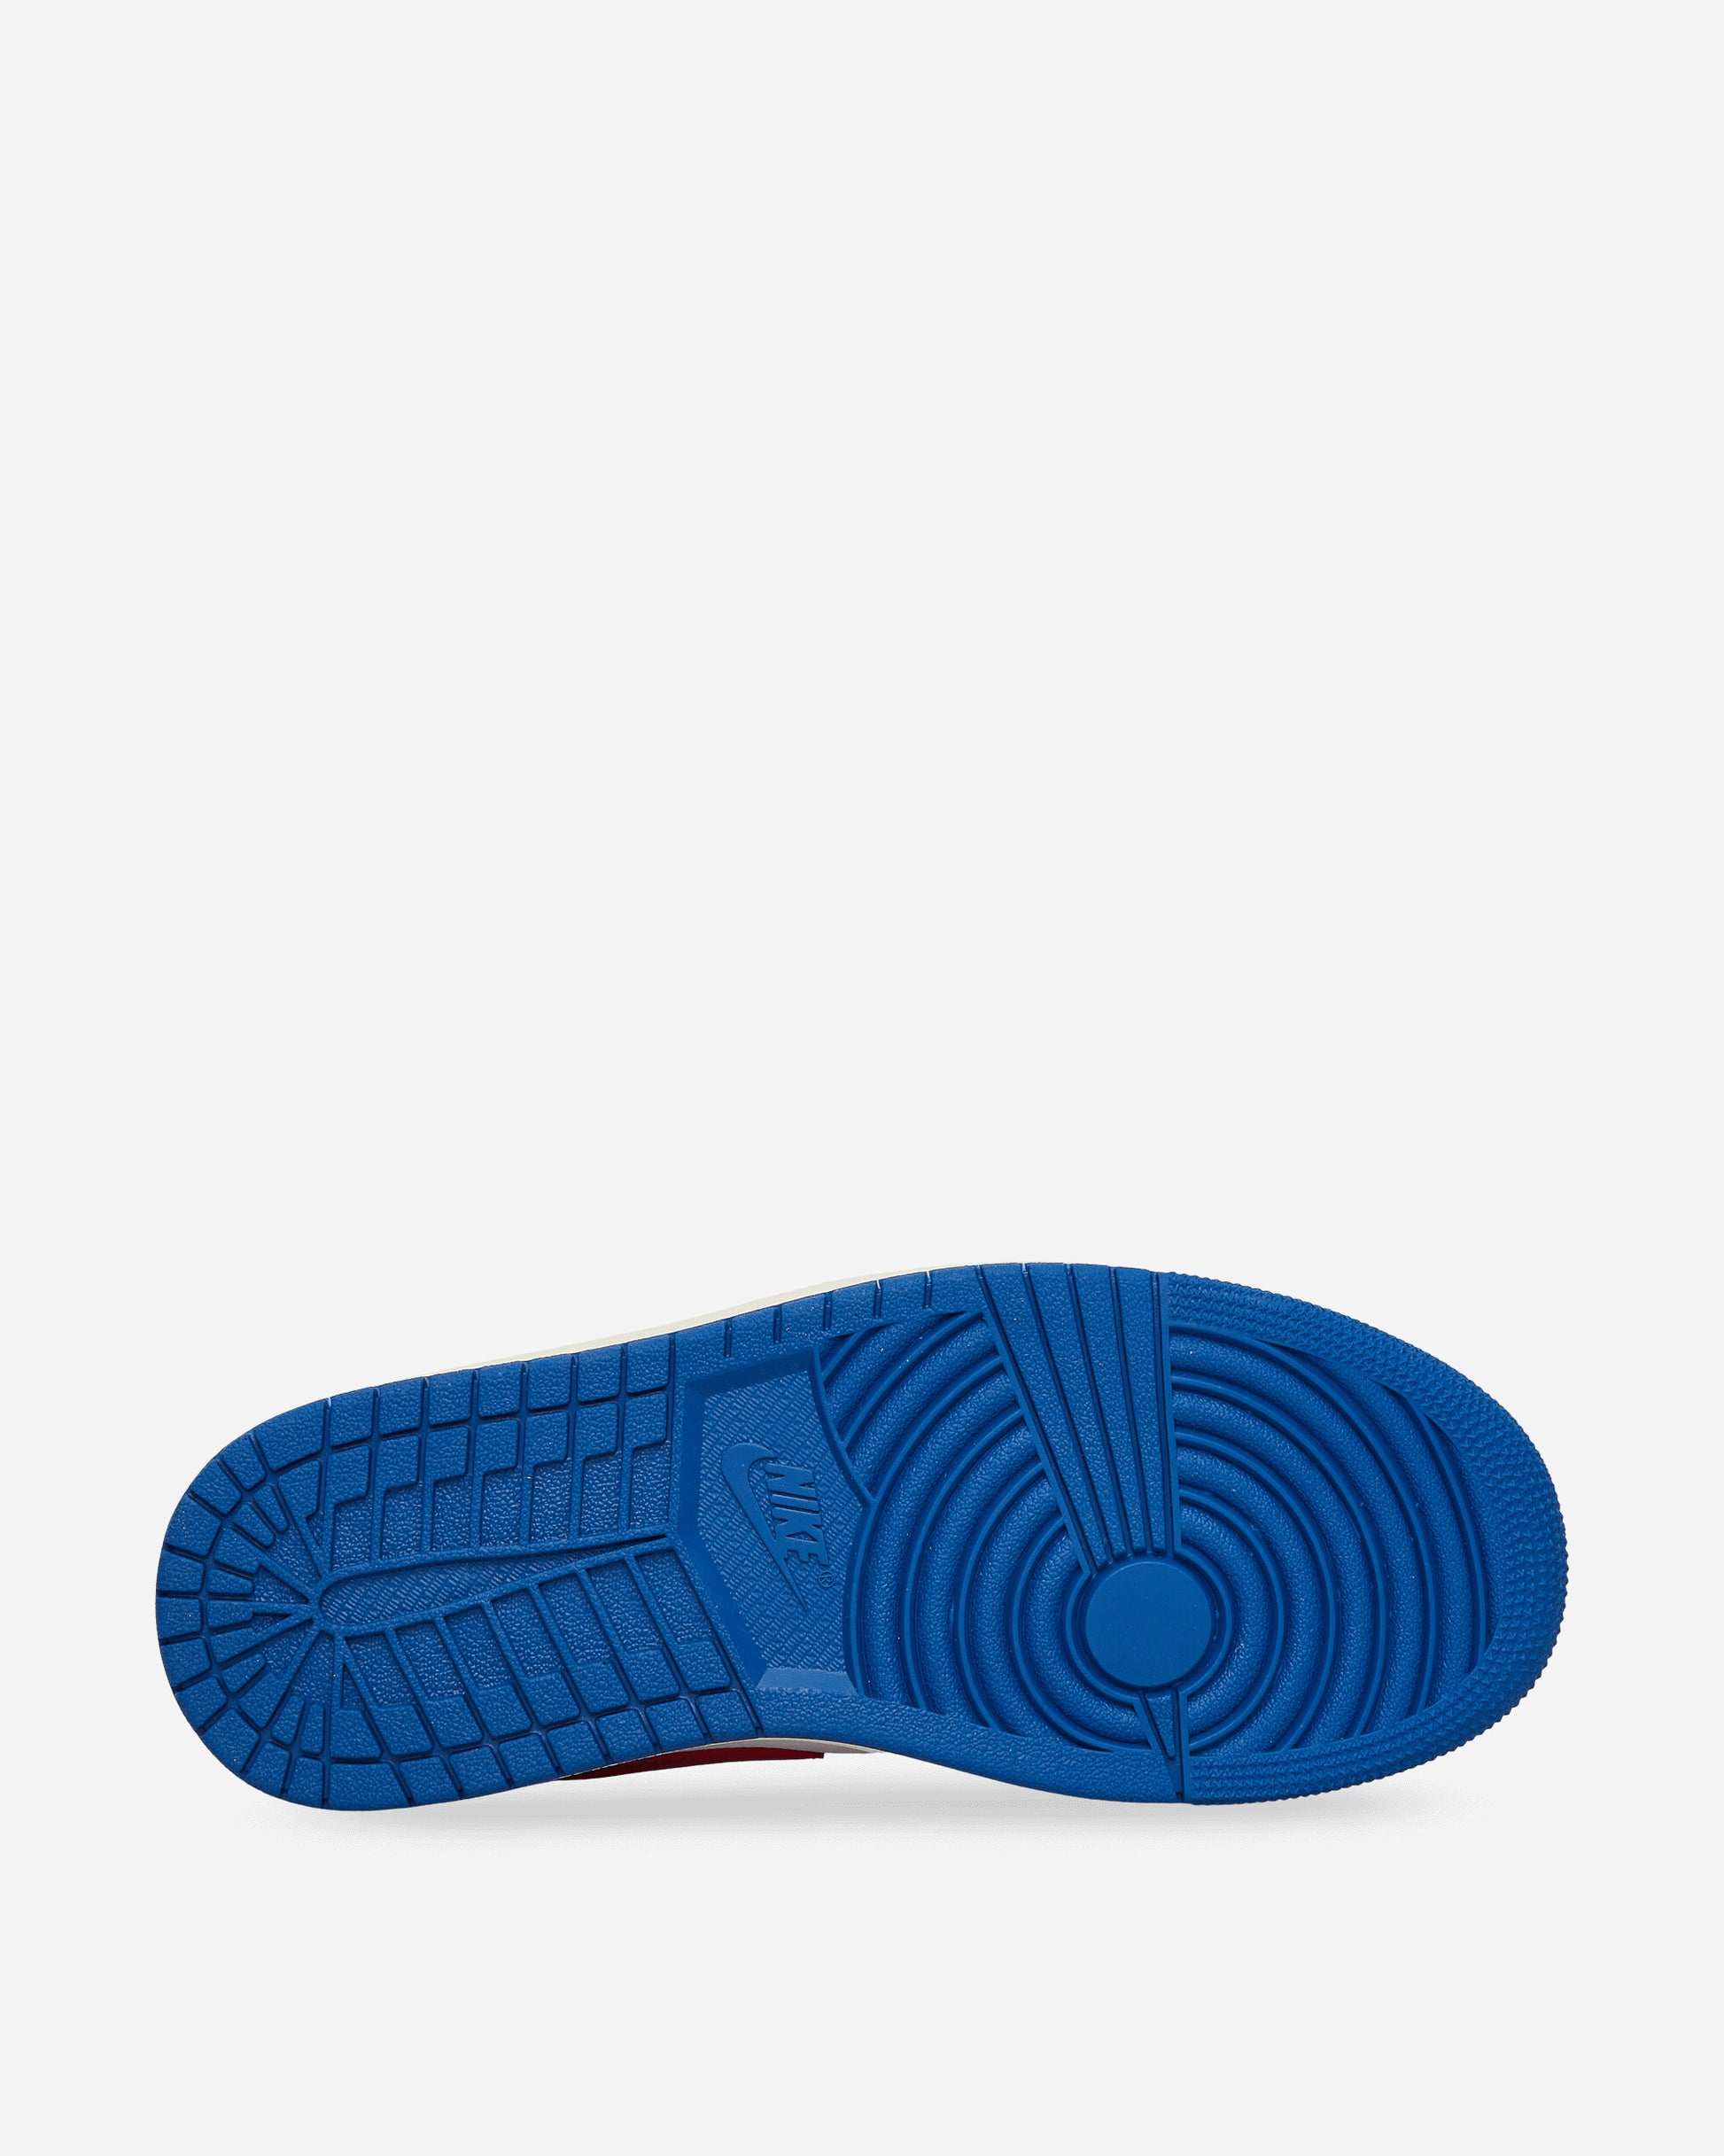 Nike Jordan Wmns Air Jordan 1 Low Blue Sport/Gym Red Sneakers Low DC0774-416